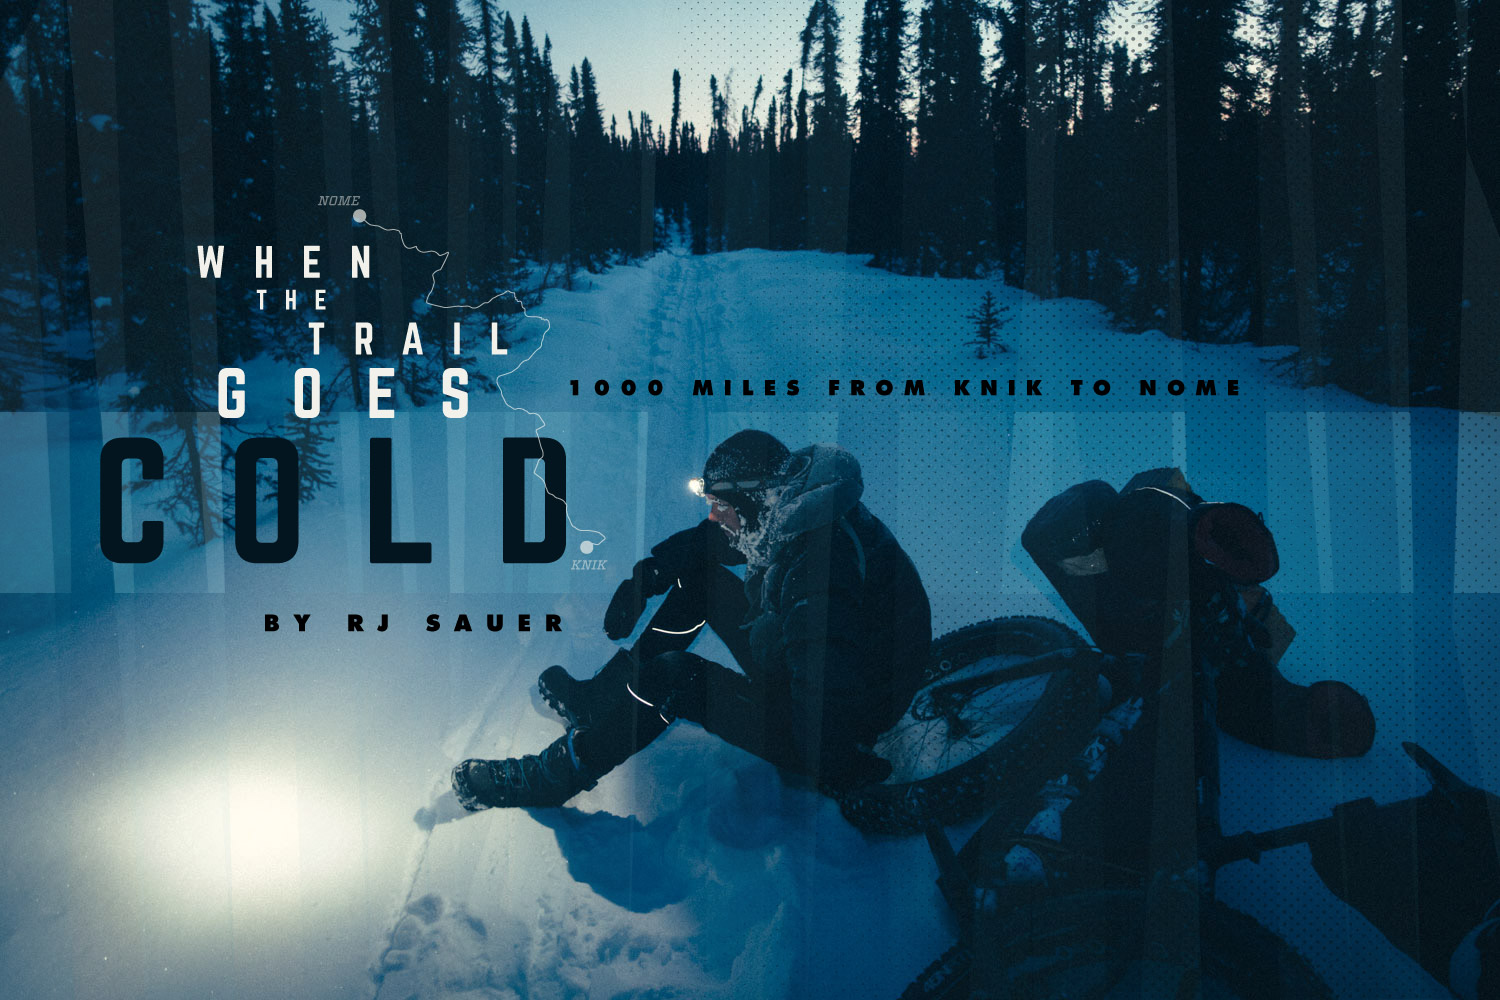 When The Trail Goes Cold, Fat Bike Iditarod Trail Invitational, by RJ Sauer